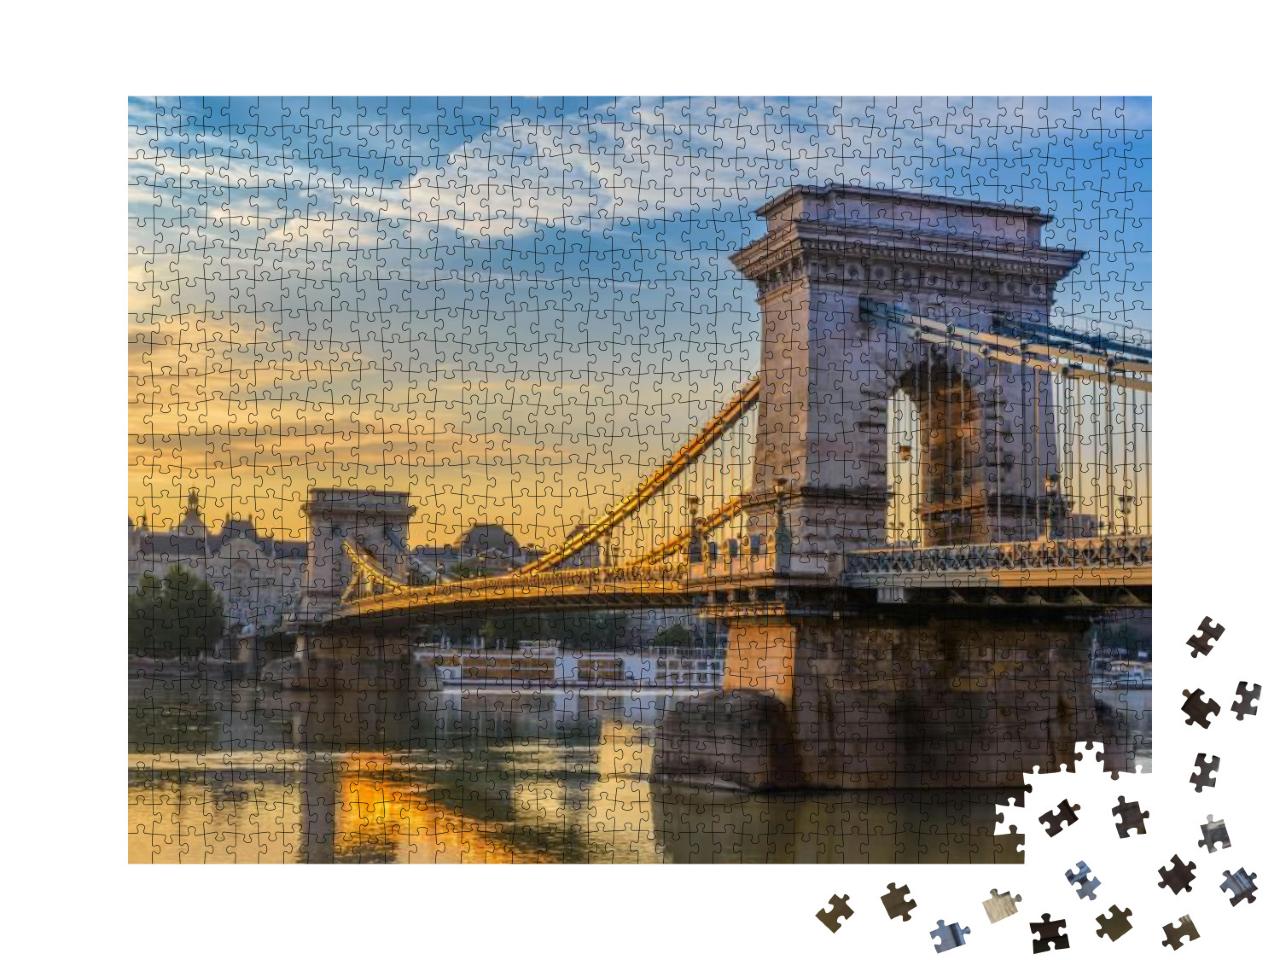 Budapest Hungary, Sunrise City Skyline At Chain Bridge... Jigsaw Puzzle with 1000 pieces